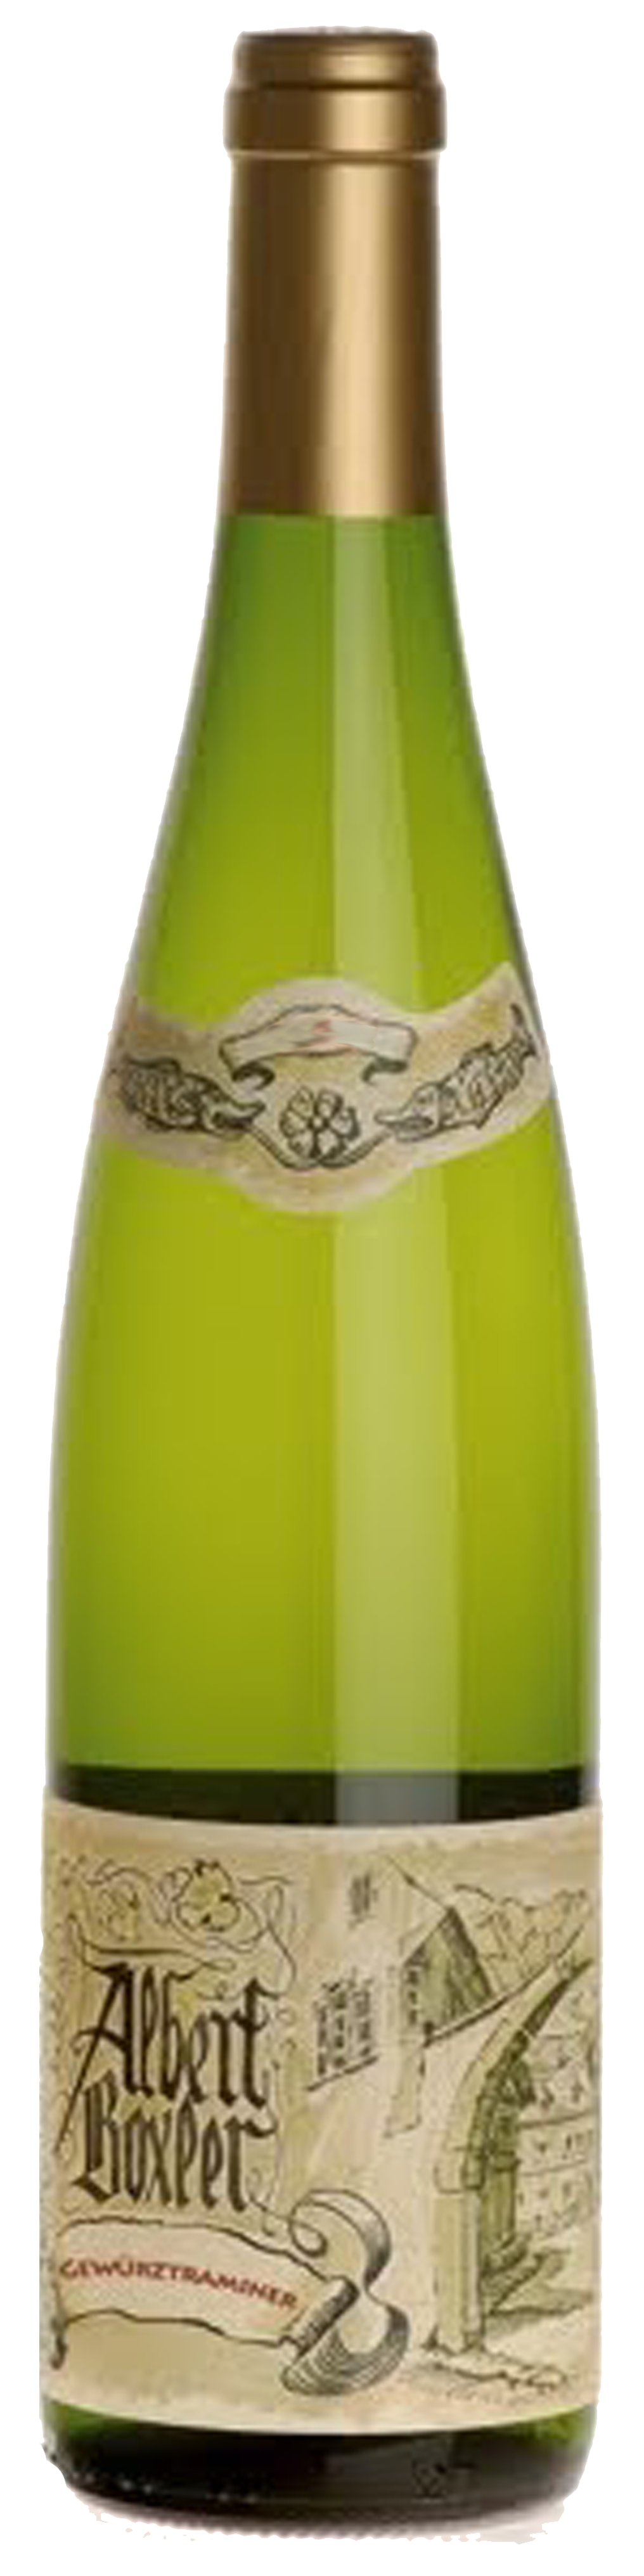 Bottle shot of 2012 Gewürztraminer Grand Cru Brand